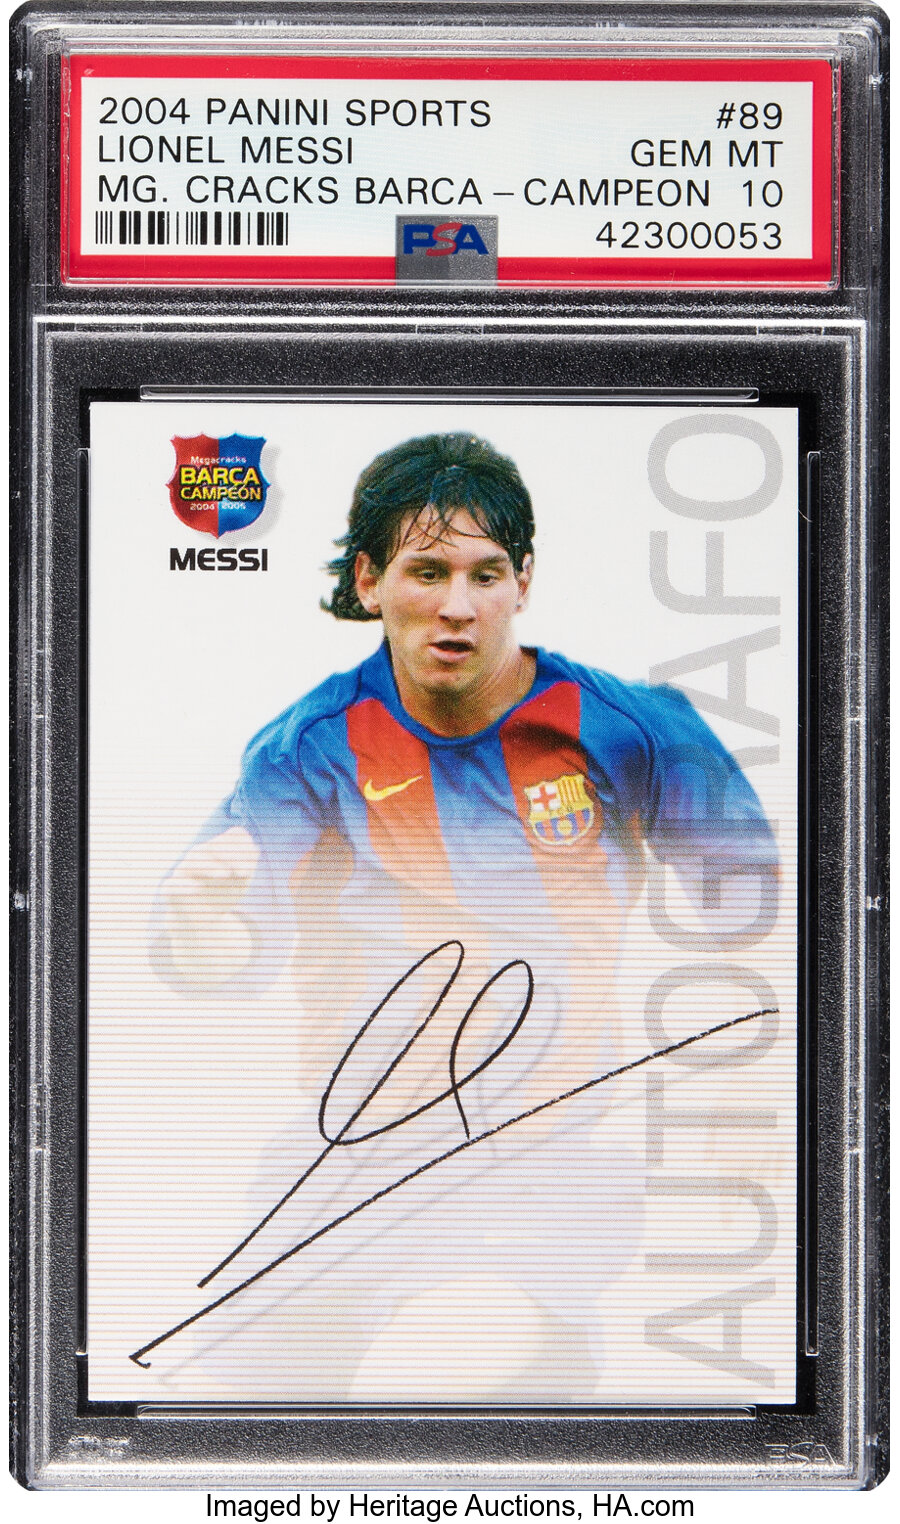 2004 Panini Sports Lionel Messi (Mega Cracks Barca - Campeon) Rookie #89 PSA Gem Mint 10